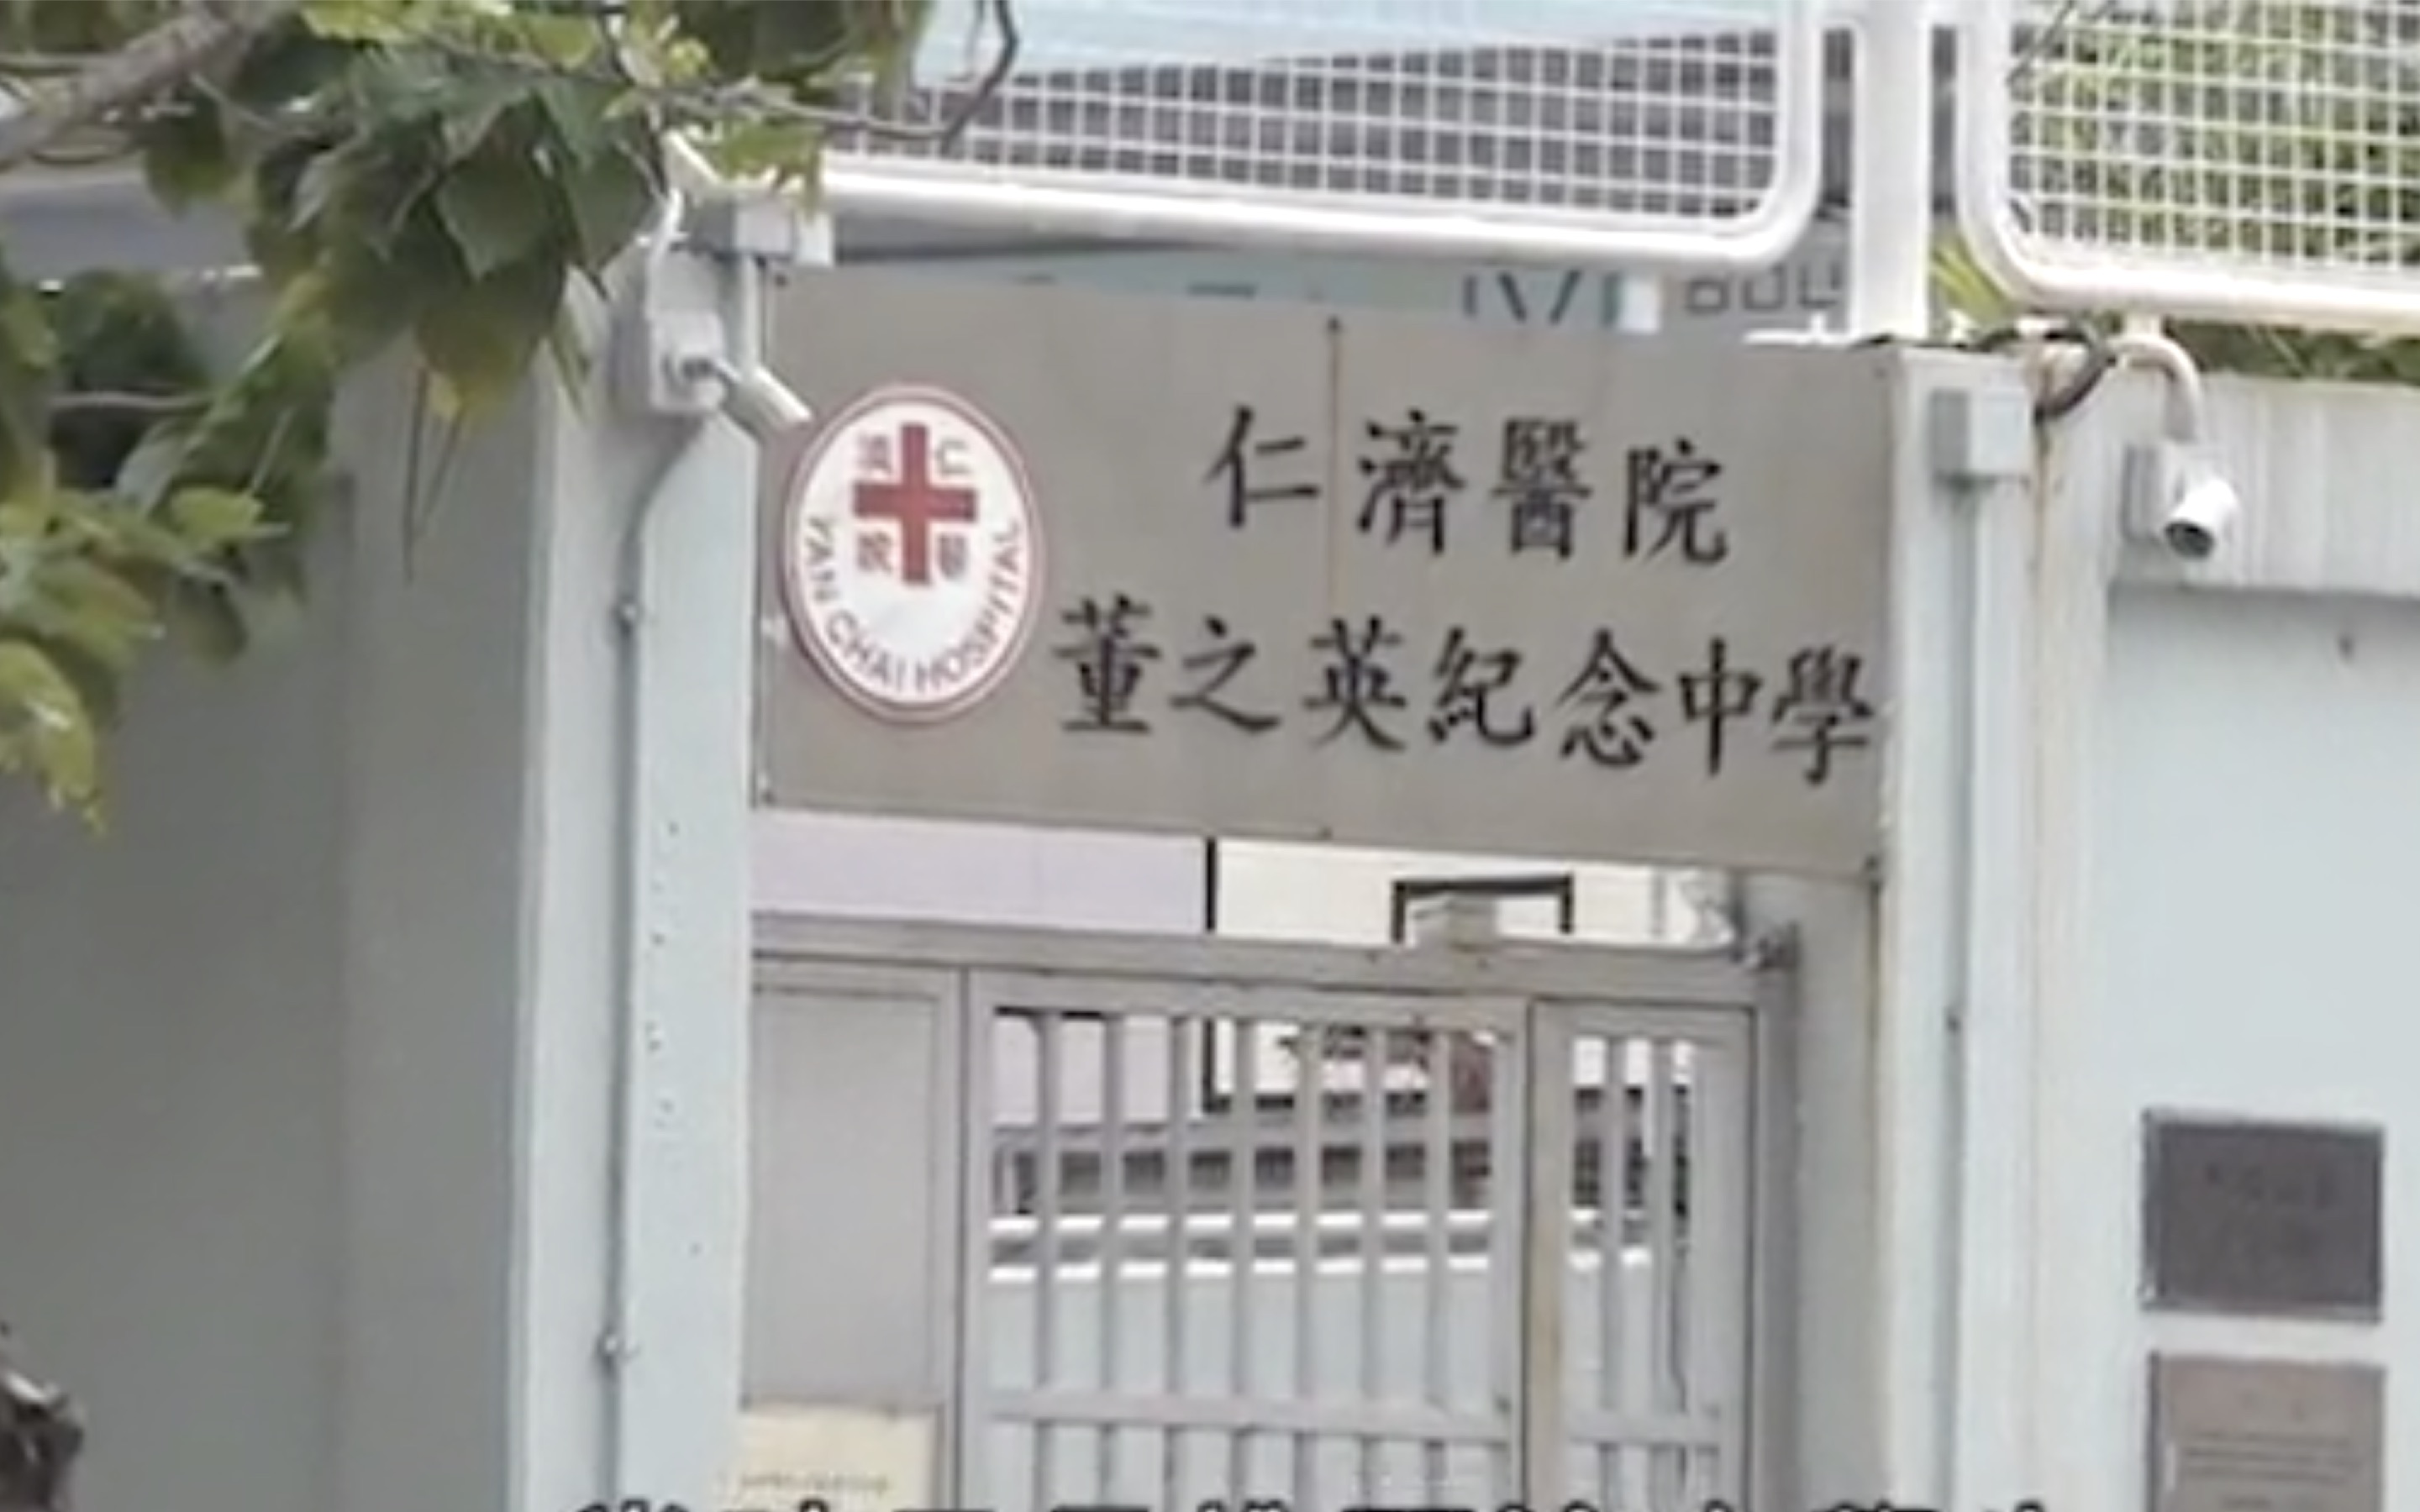 Entrance of the Yan Chai Hospital Tung Chi Ying Memorial Secondary Schoo. Screengrab via Apple Daily video.